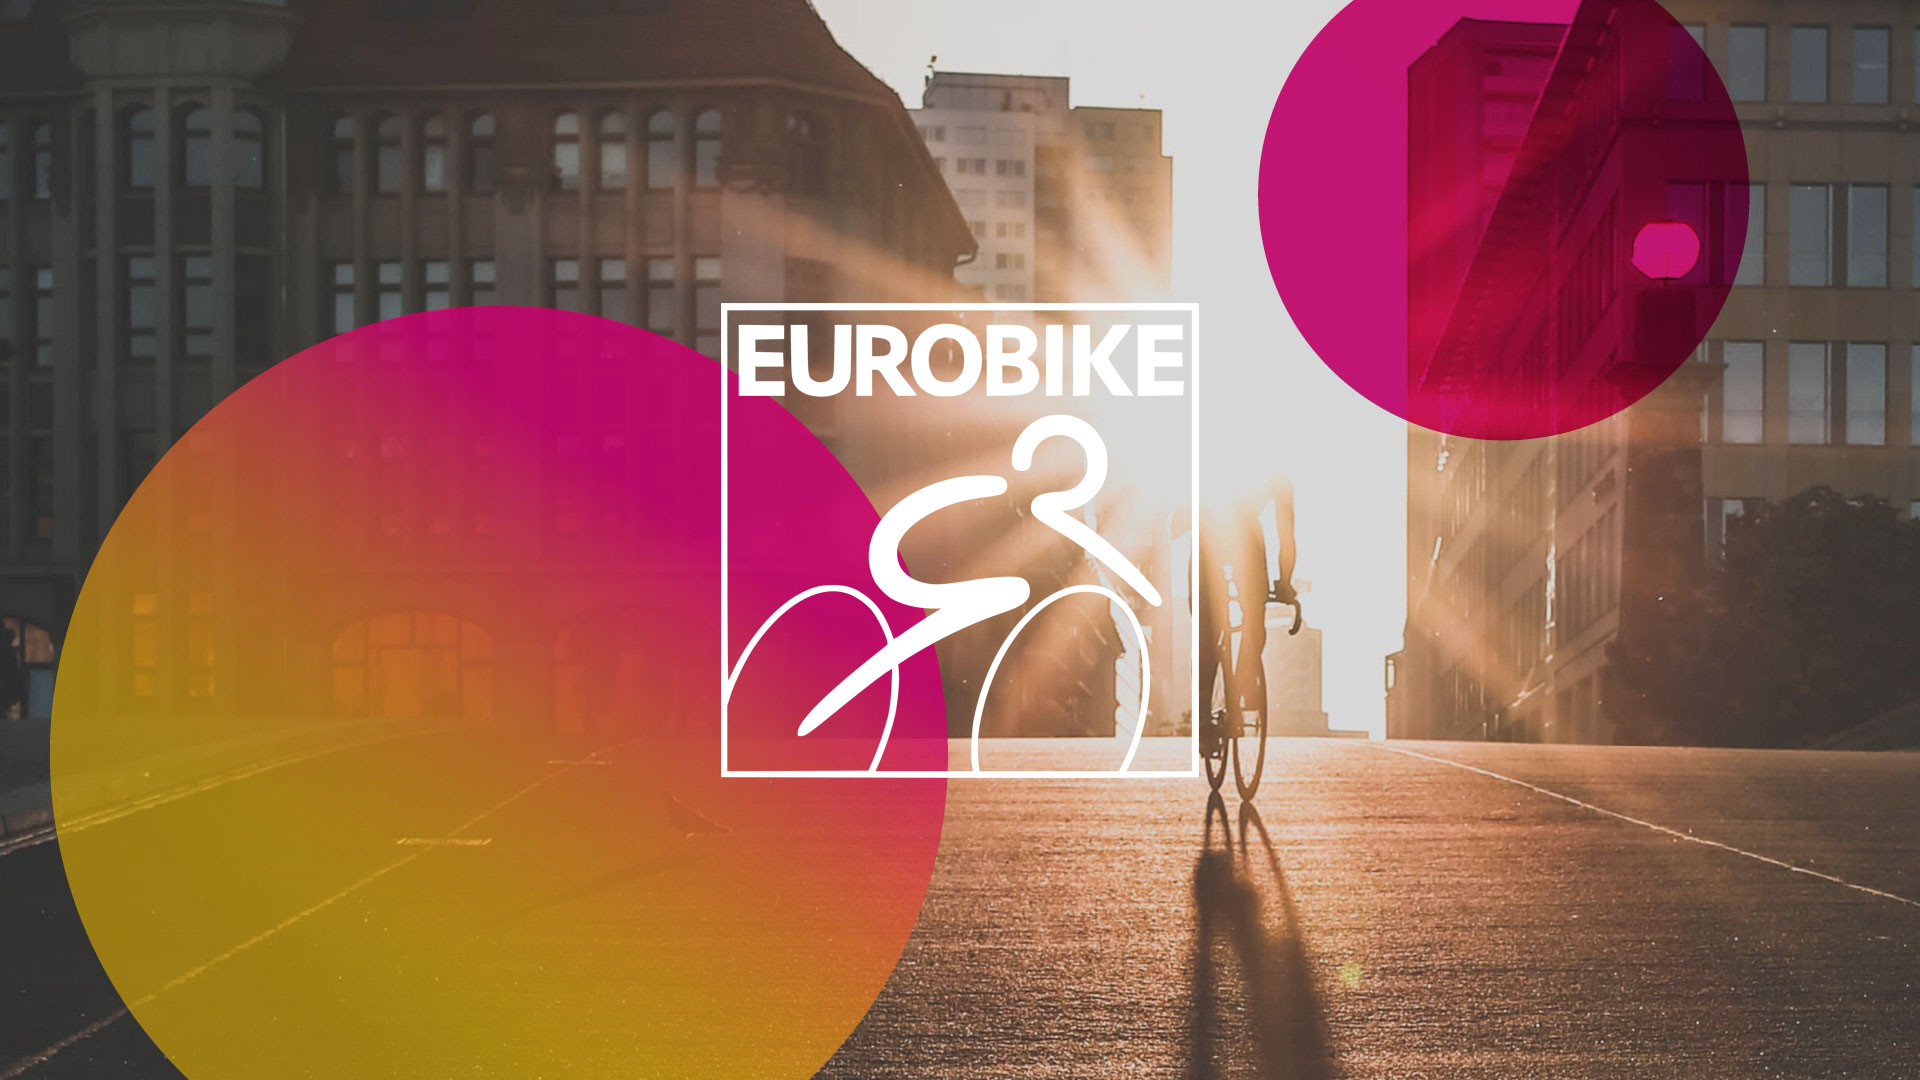 Eurobike Exhibition 2022